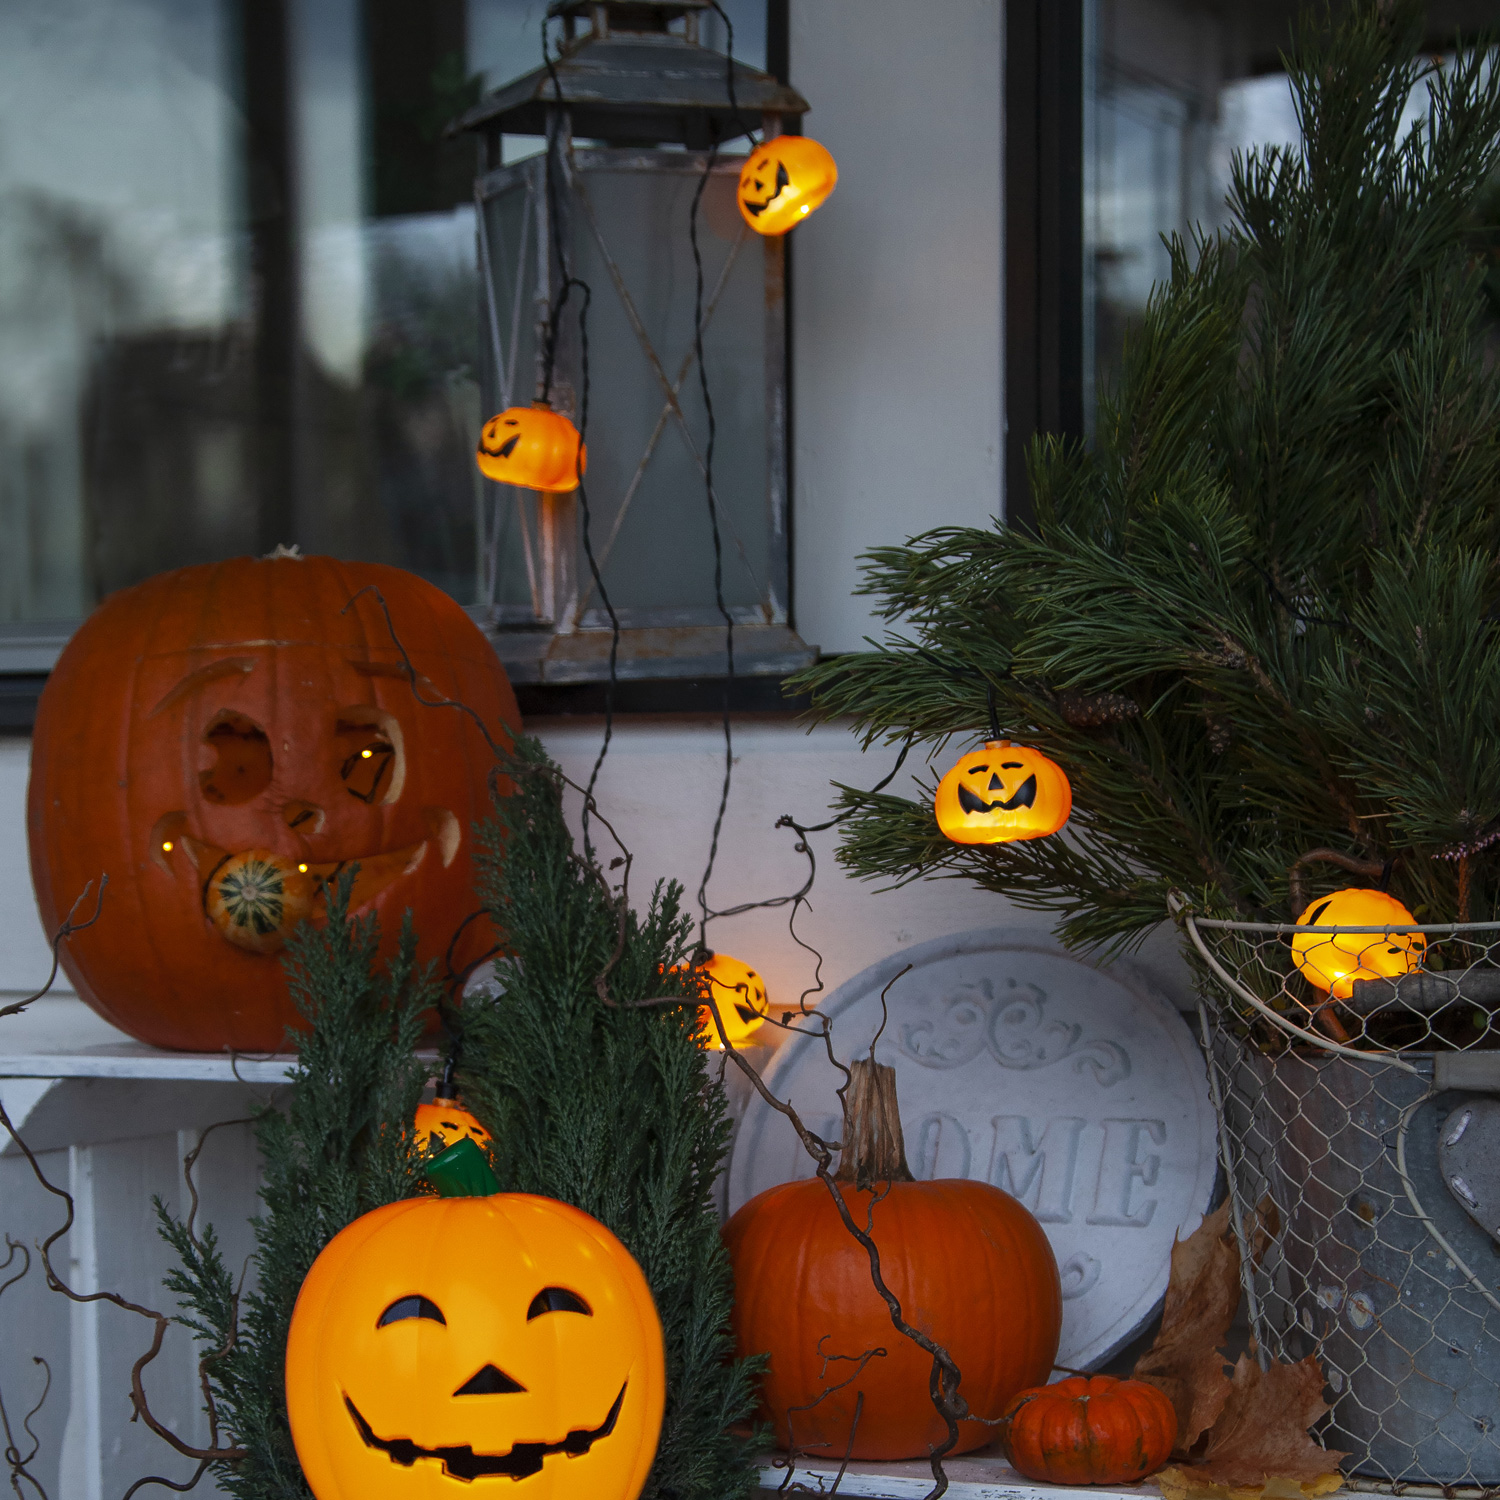 LED Halloween Lichterkette "Pumpy" - 8 orangene Kürbisse - L: 2,1m - Batterie - Timer